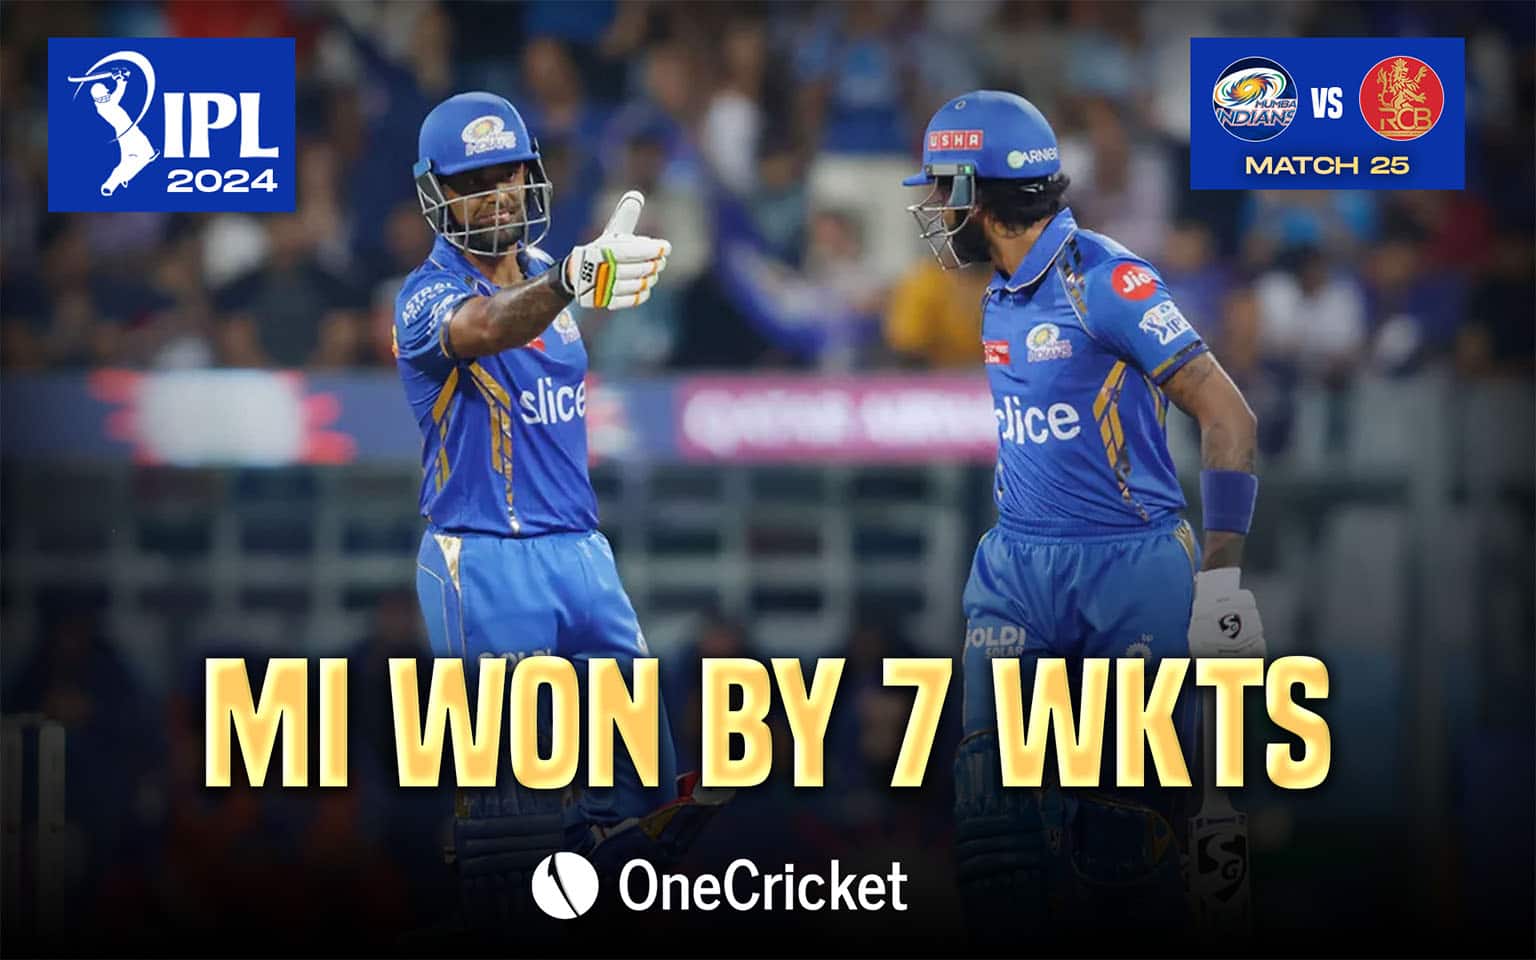 MI won by 7 wickets vs RCB (OneCricket)